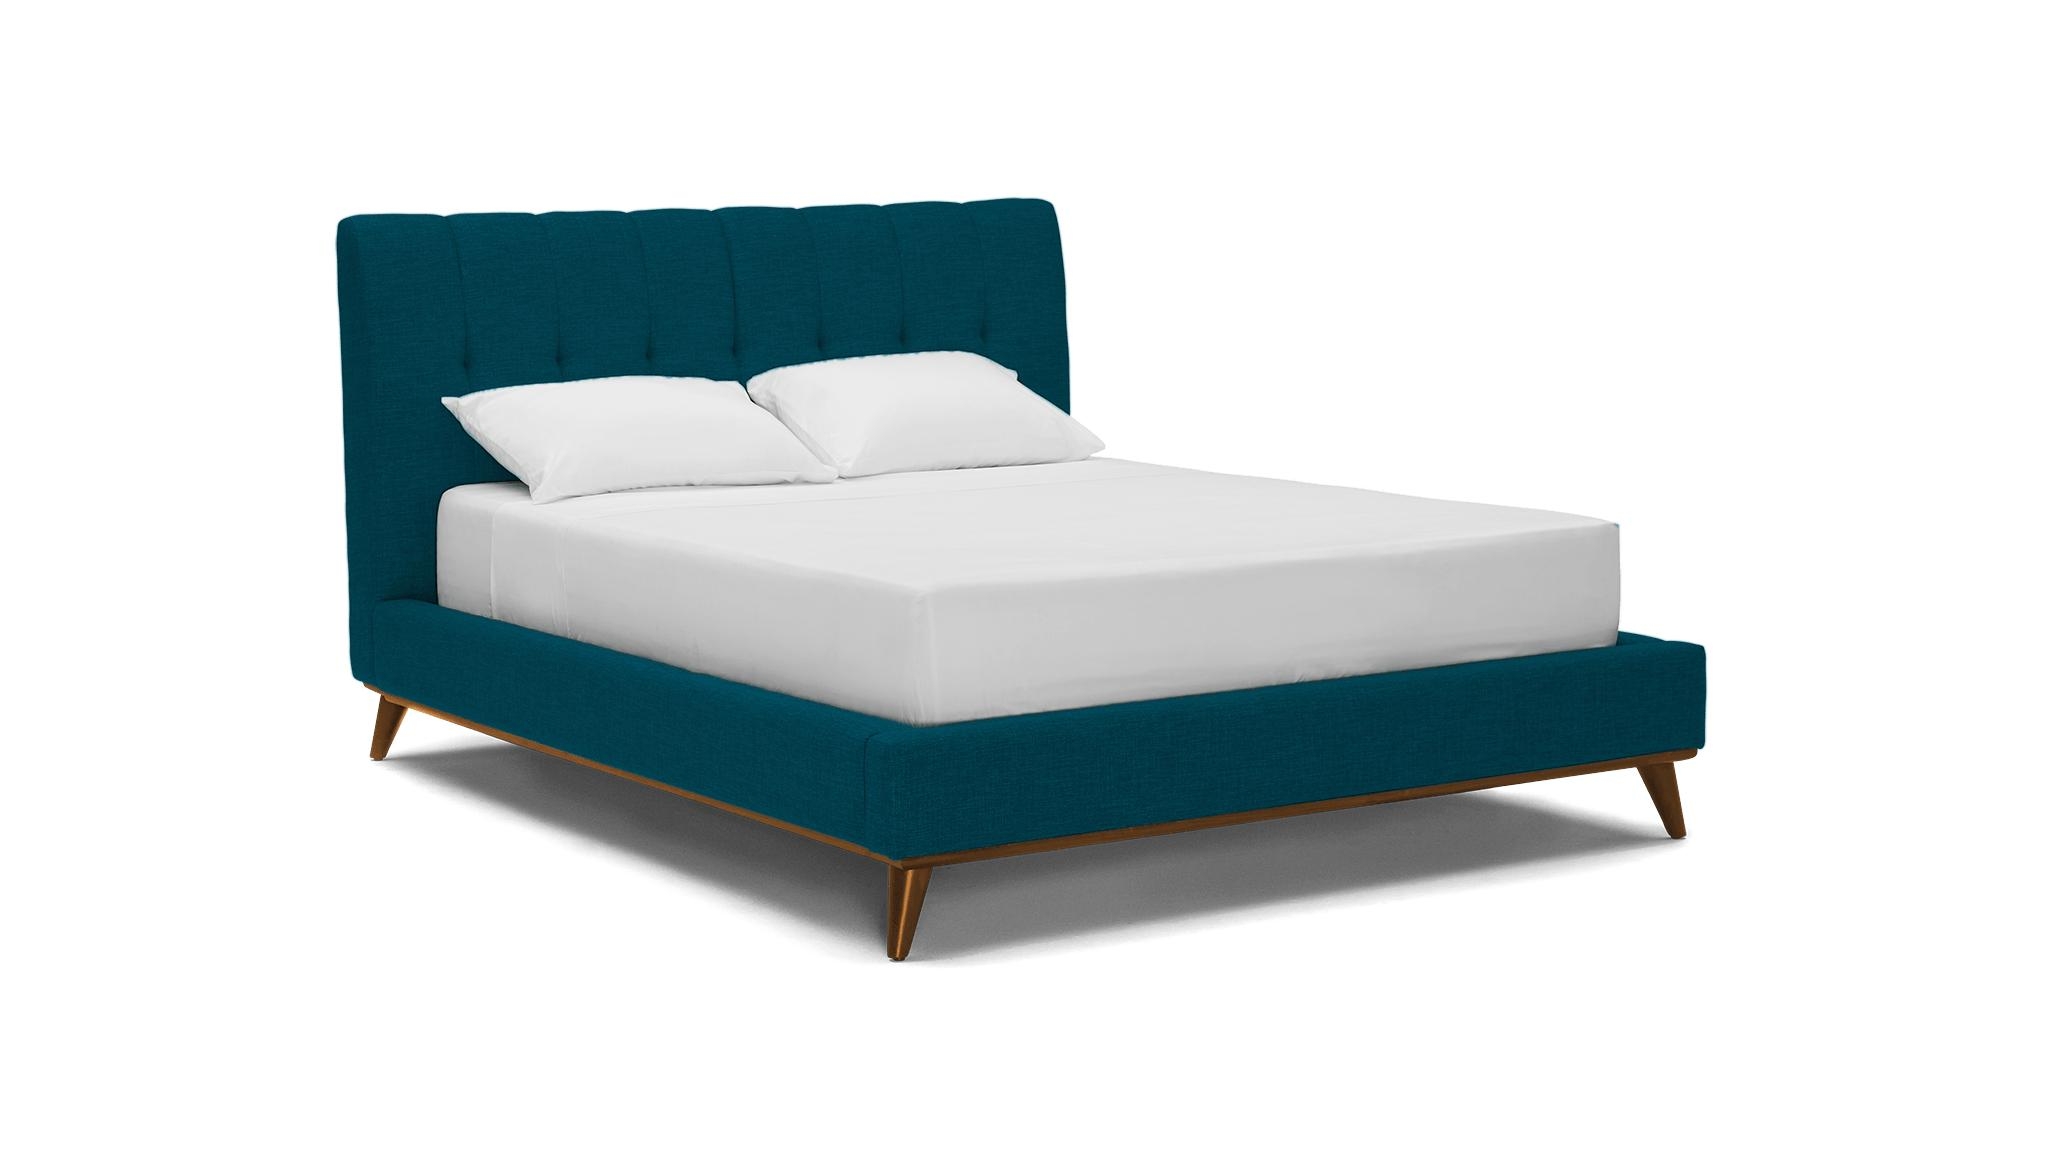 Blue Hughes Mid Century Modern Bed - Key Largo Zenith Teal - Mocha - Queen - Image 1